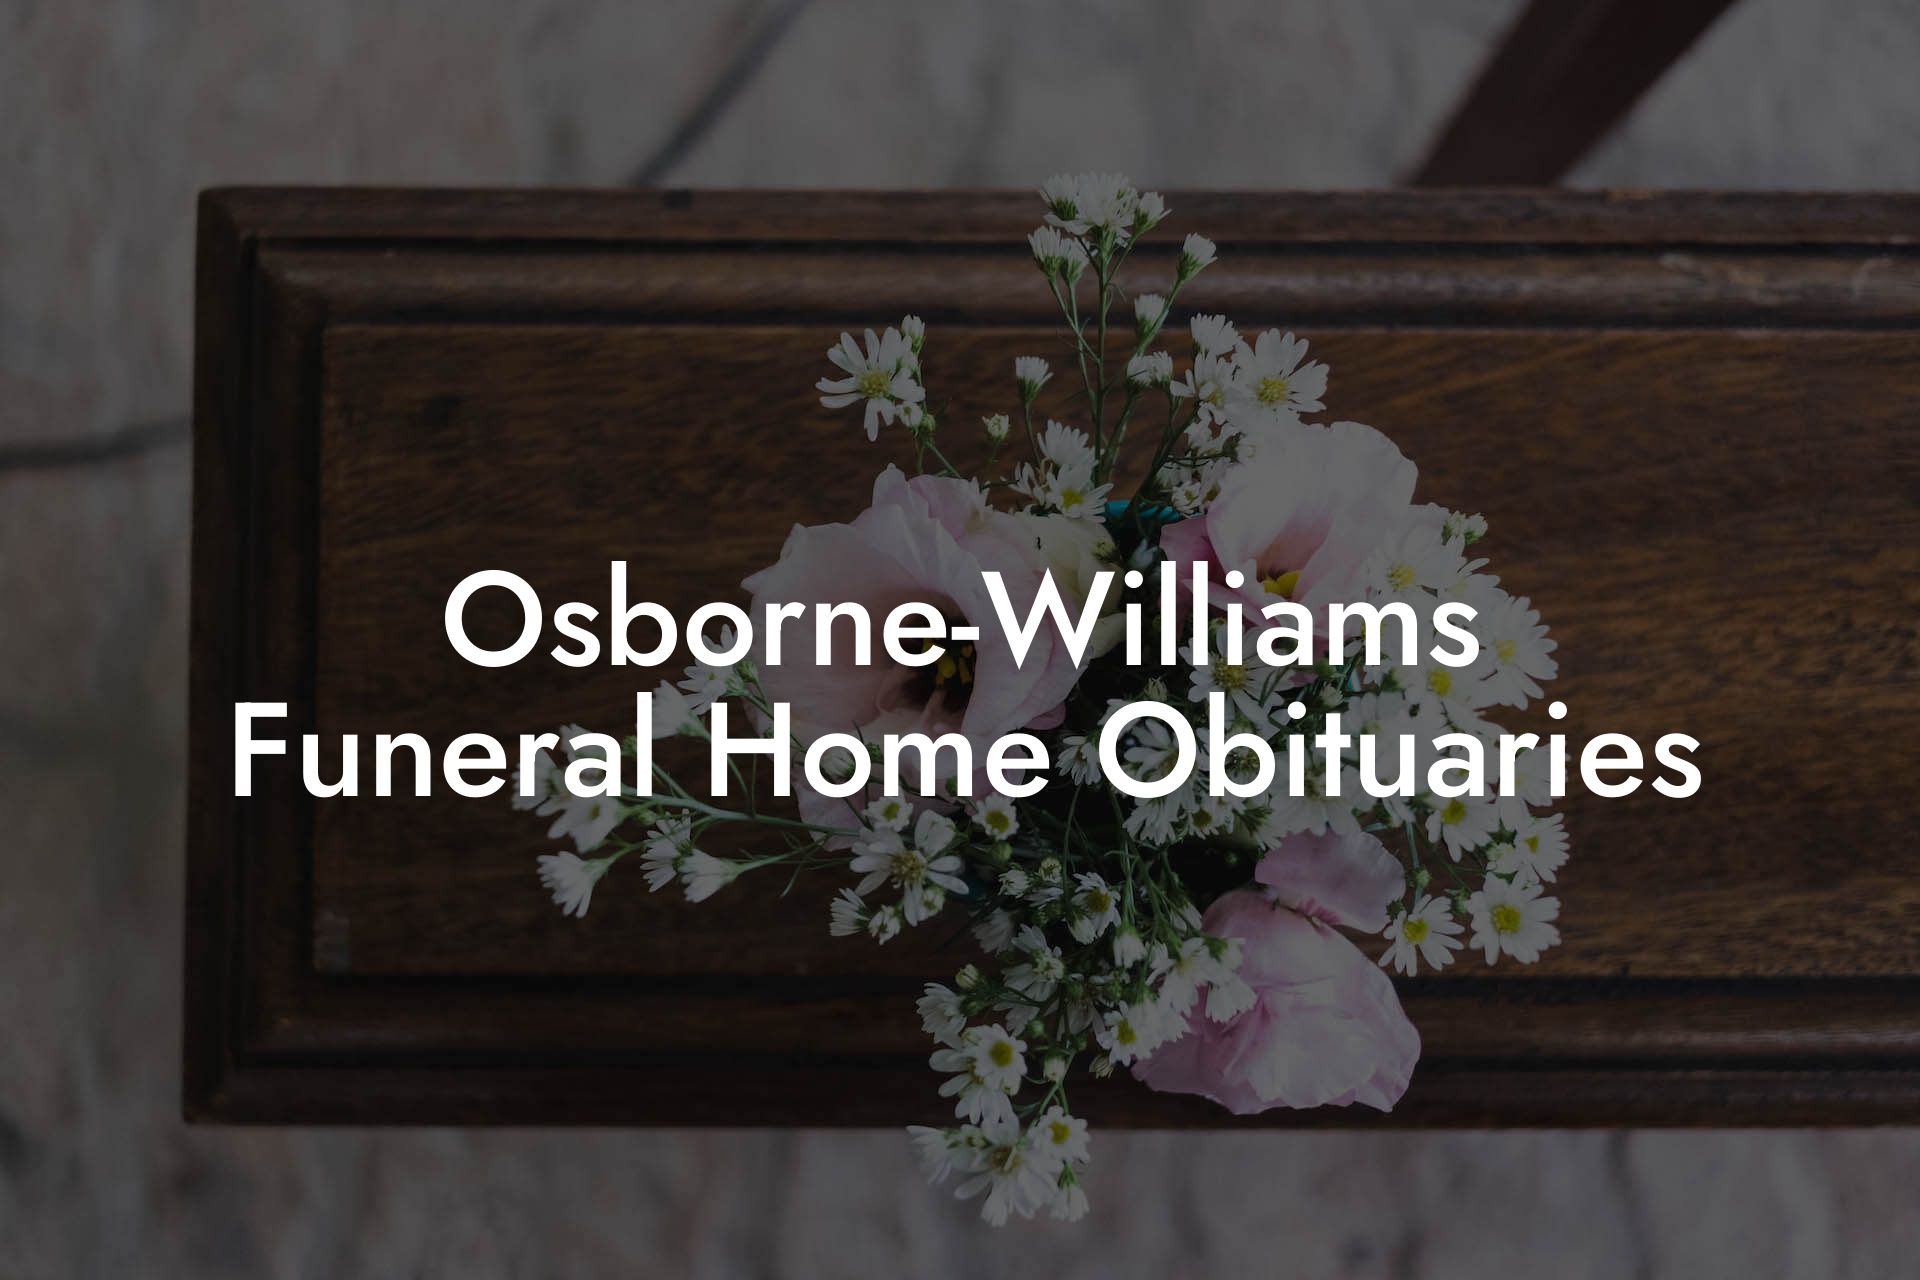 Osborne-Williams Funeral Home Obituaries